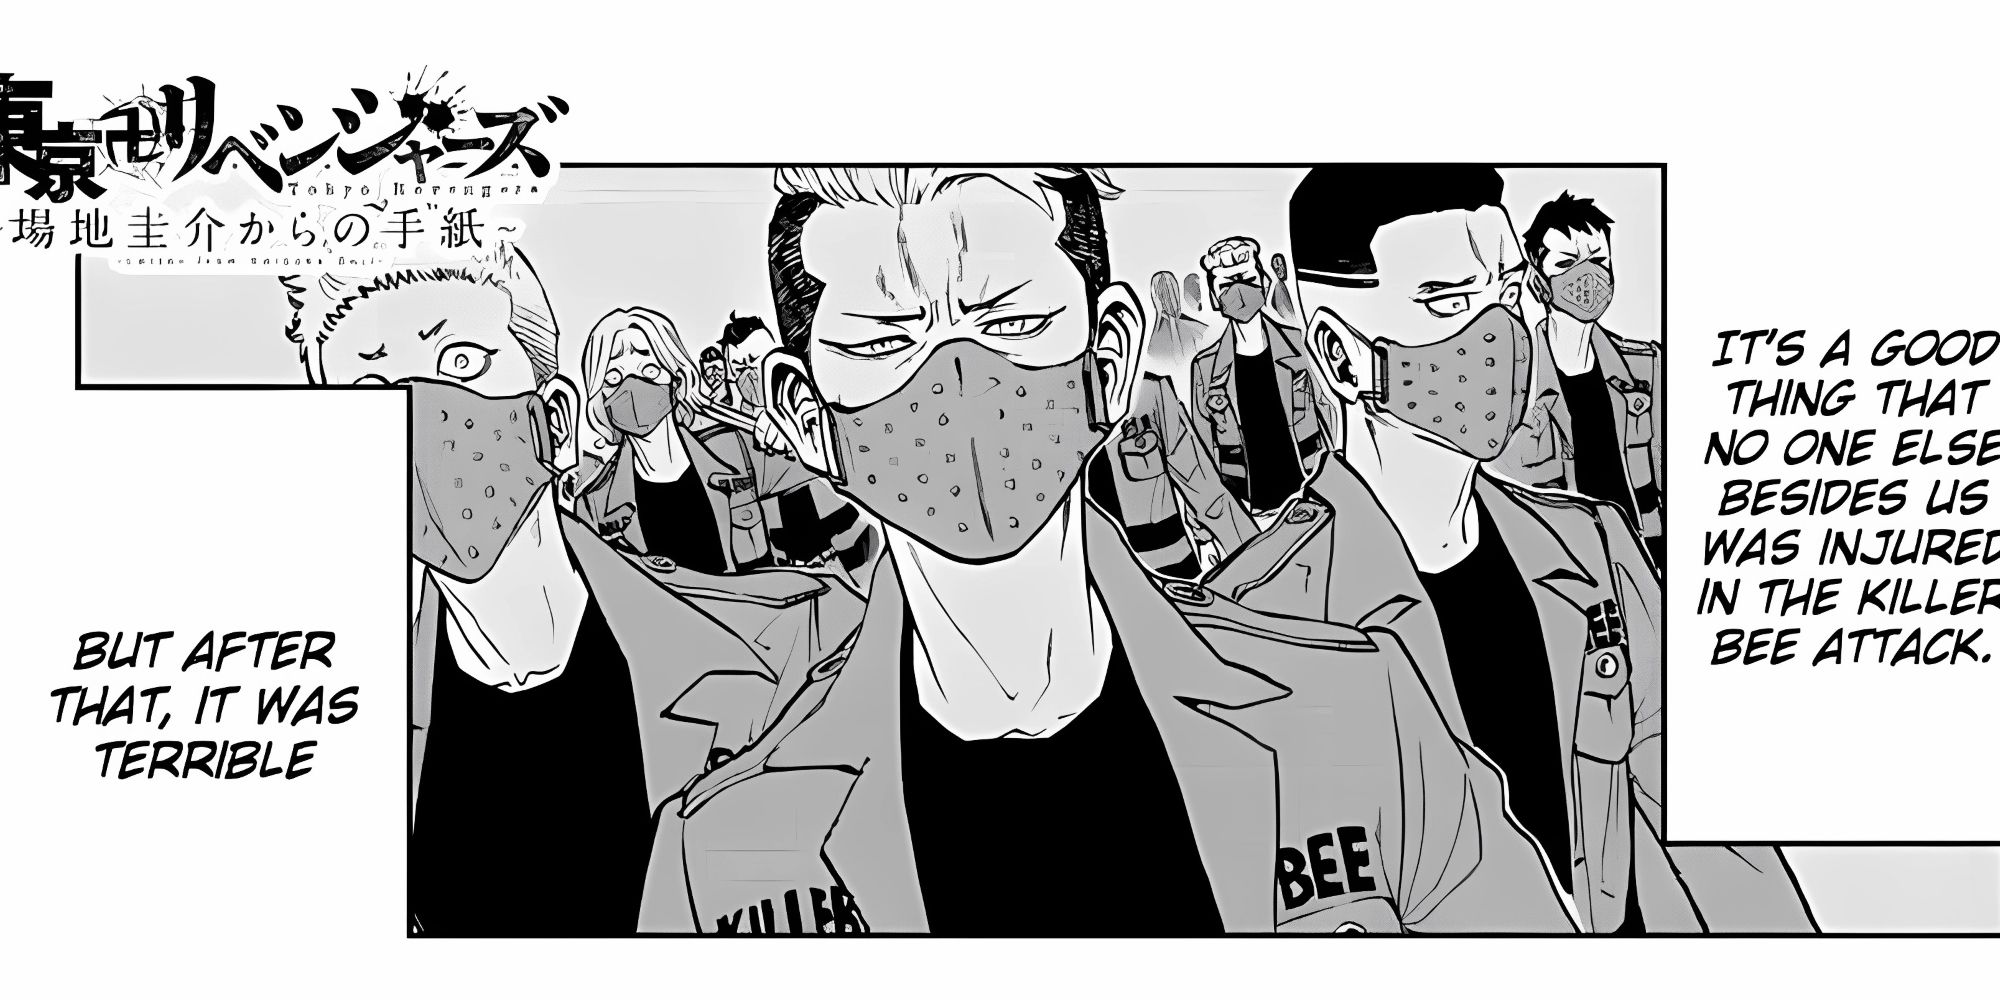 Killer Bee Gang as seen in the manga